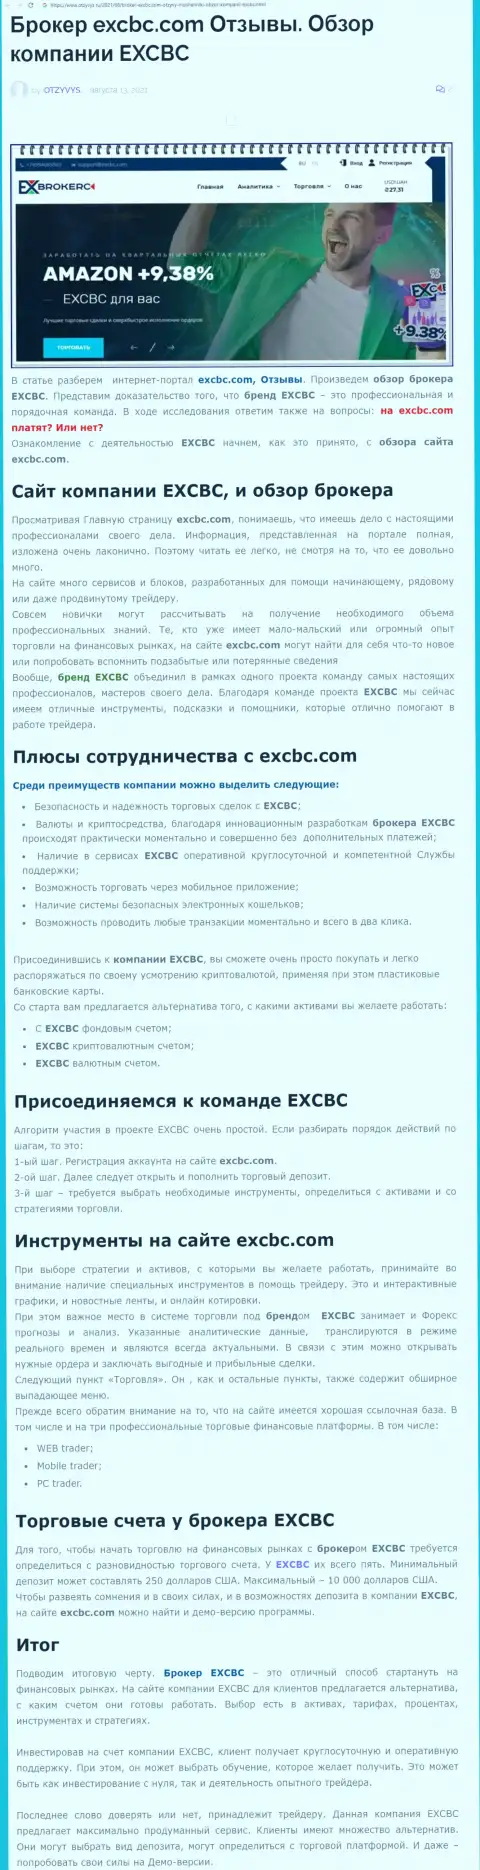 Публикация о Форекс дилере EXCBC на сайте Otzyvys Ru